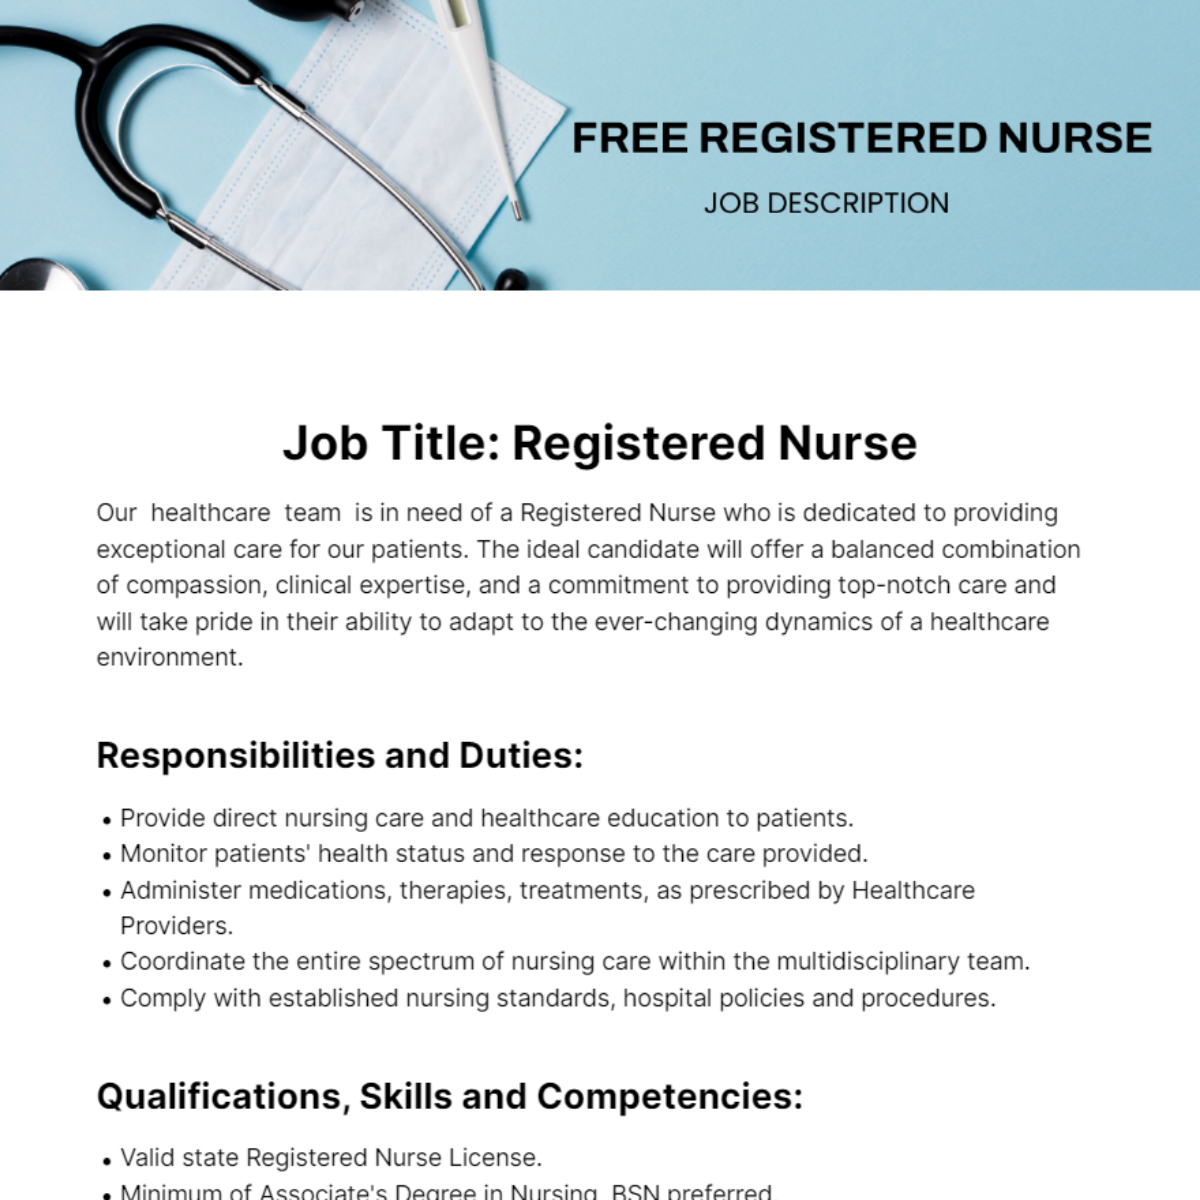 Free Registered Nurse Job Description Template